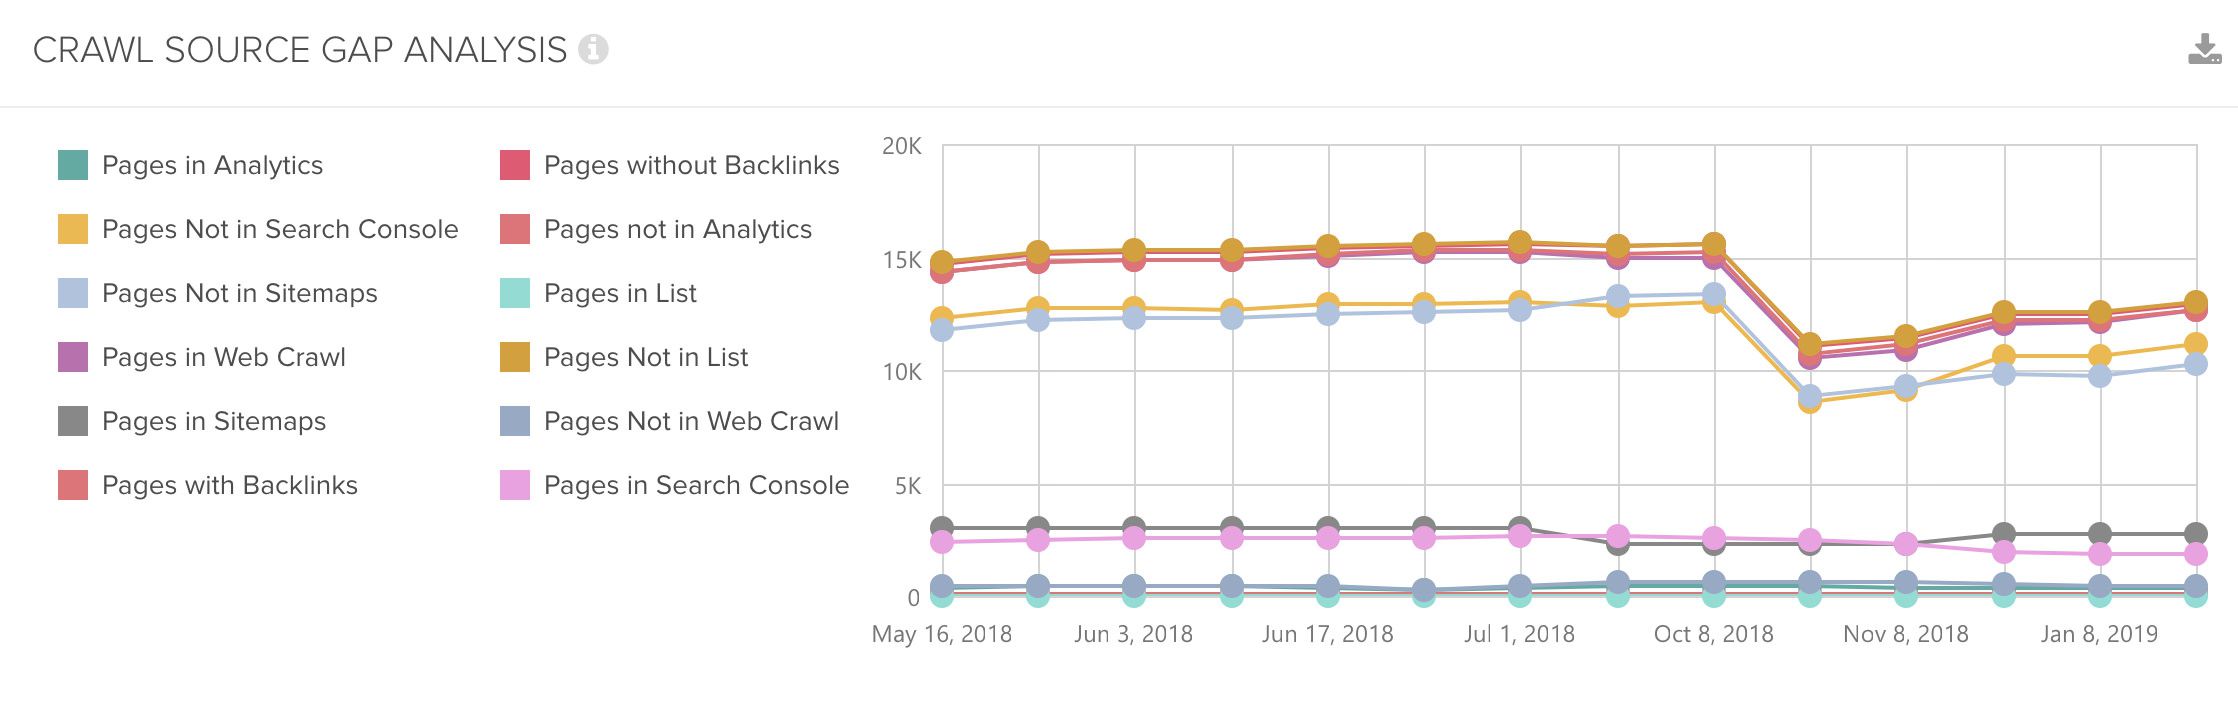 DeepCrawl Source Gap Analysis graph